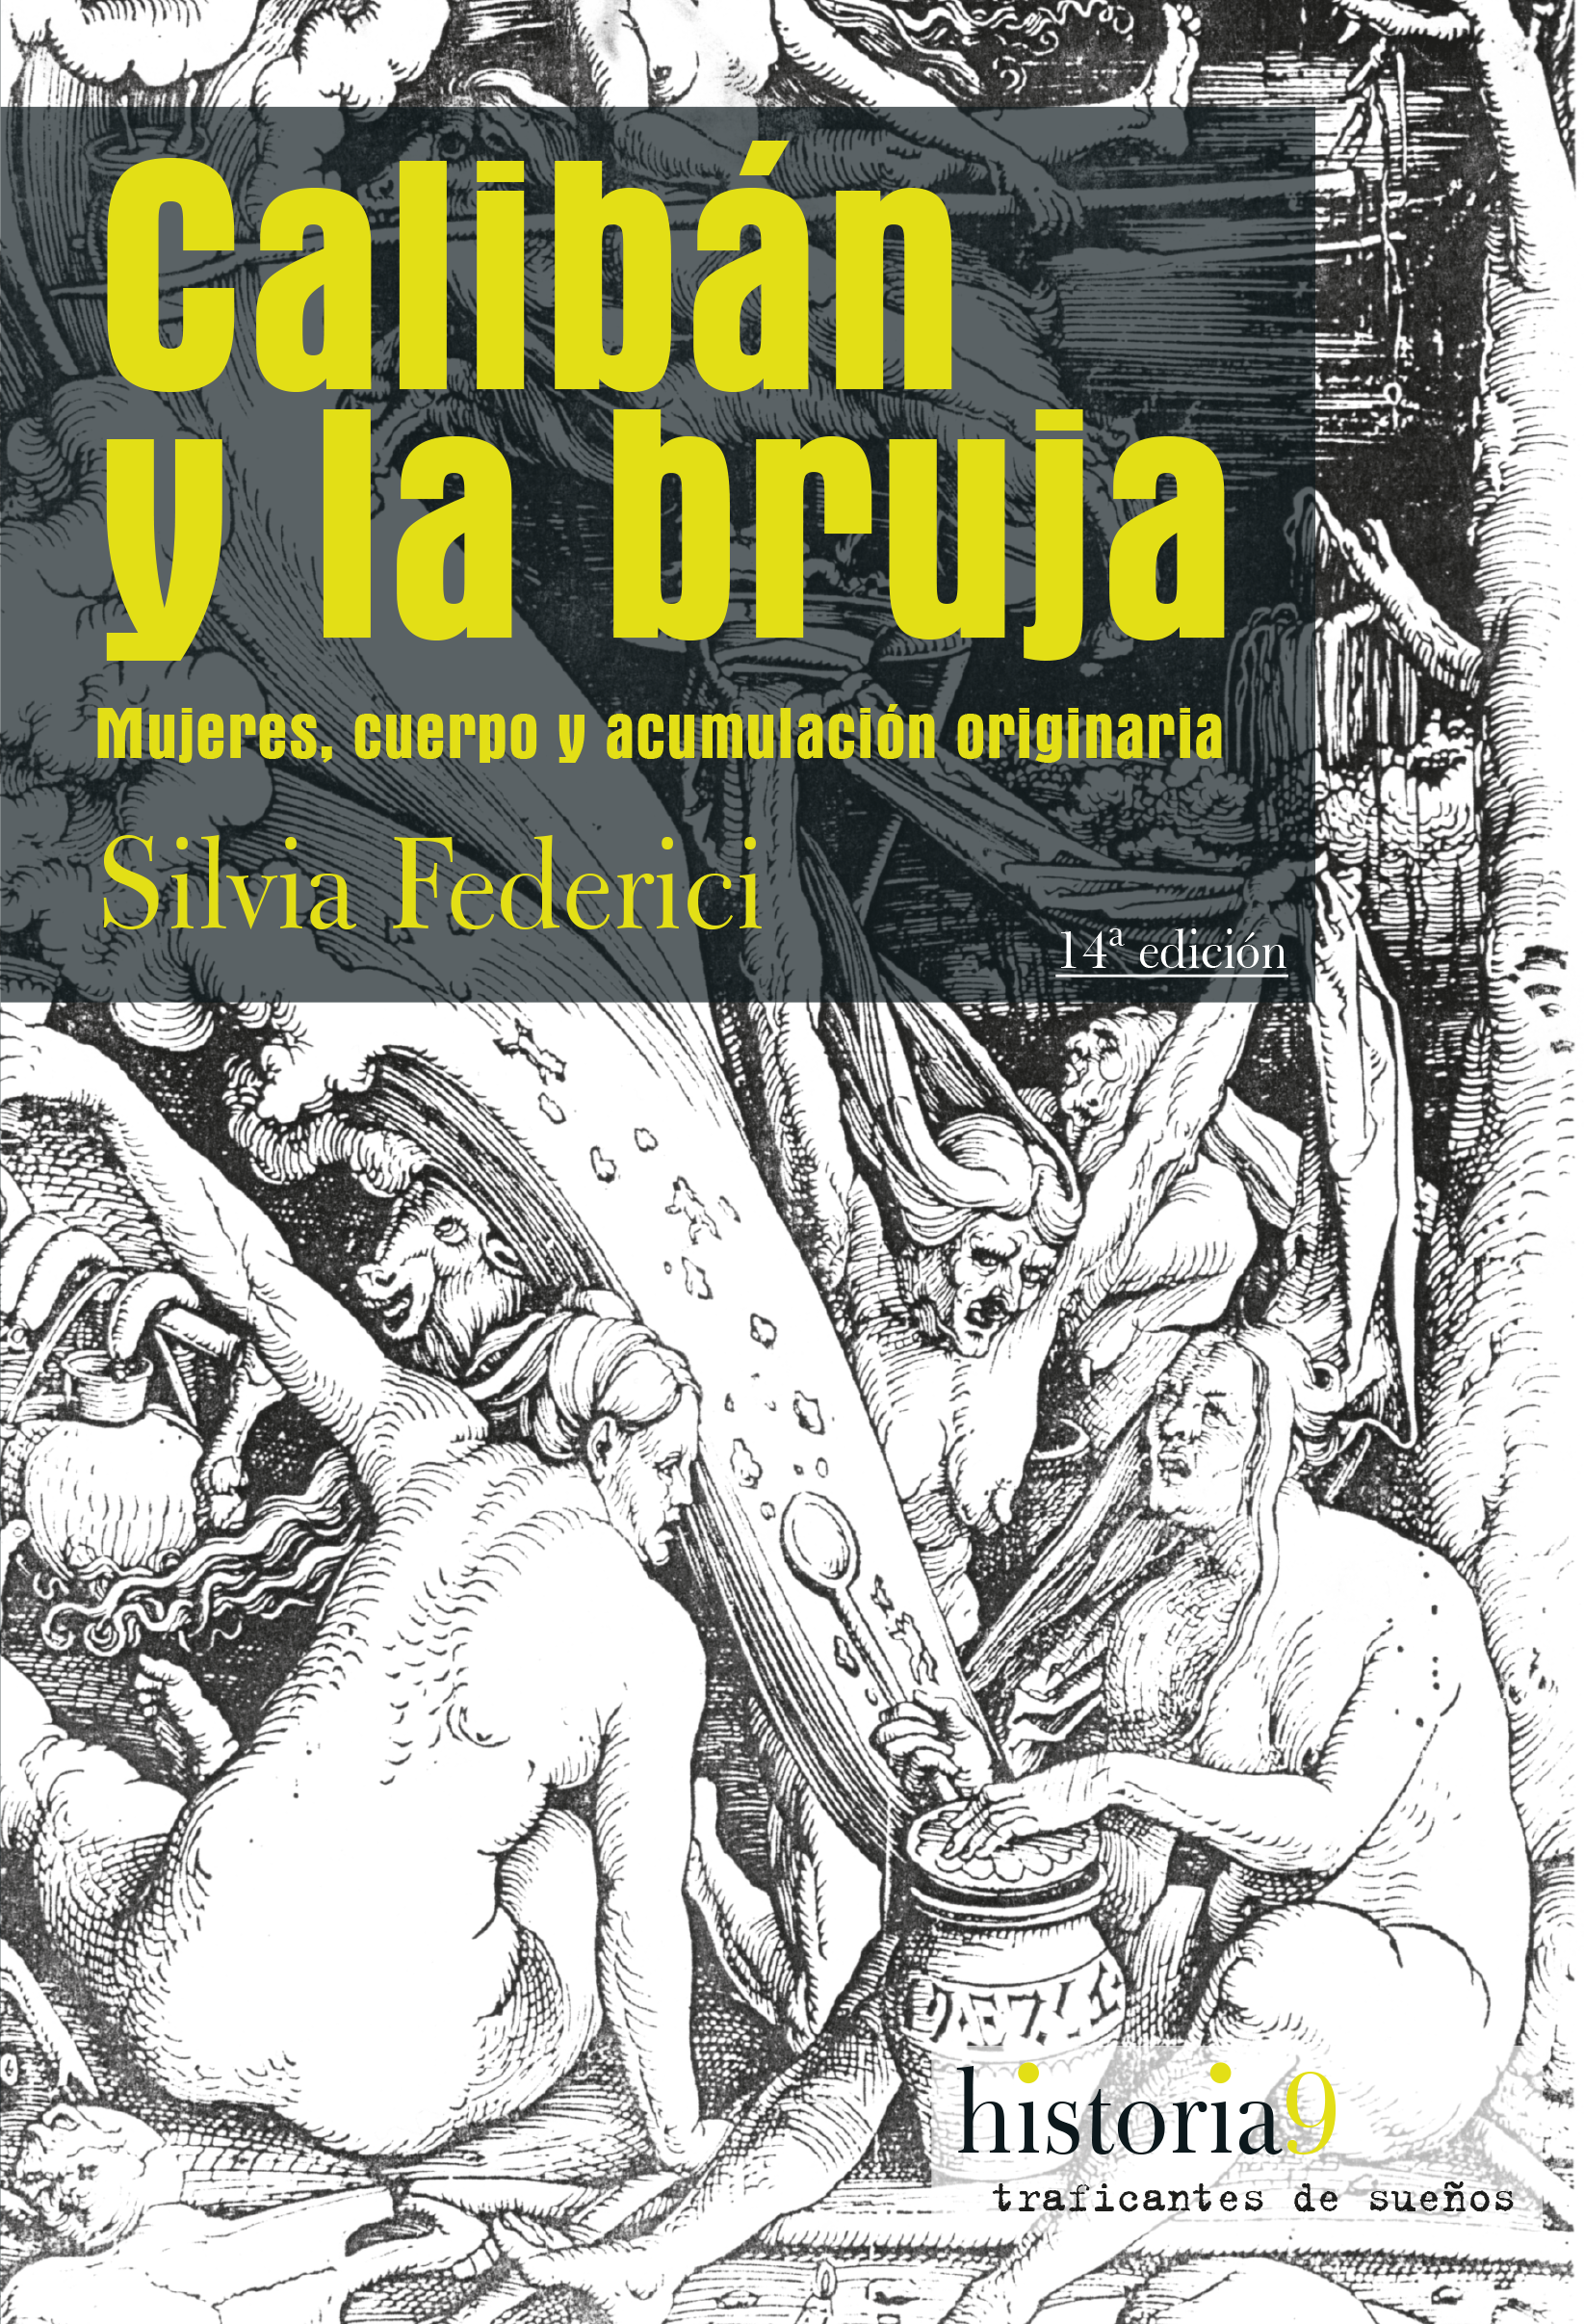 Calibán y la bruja - Silvia Federici